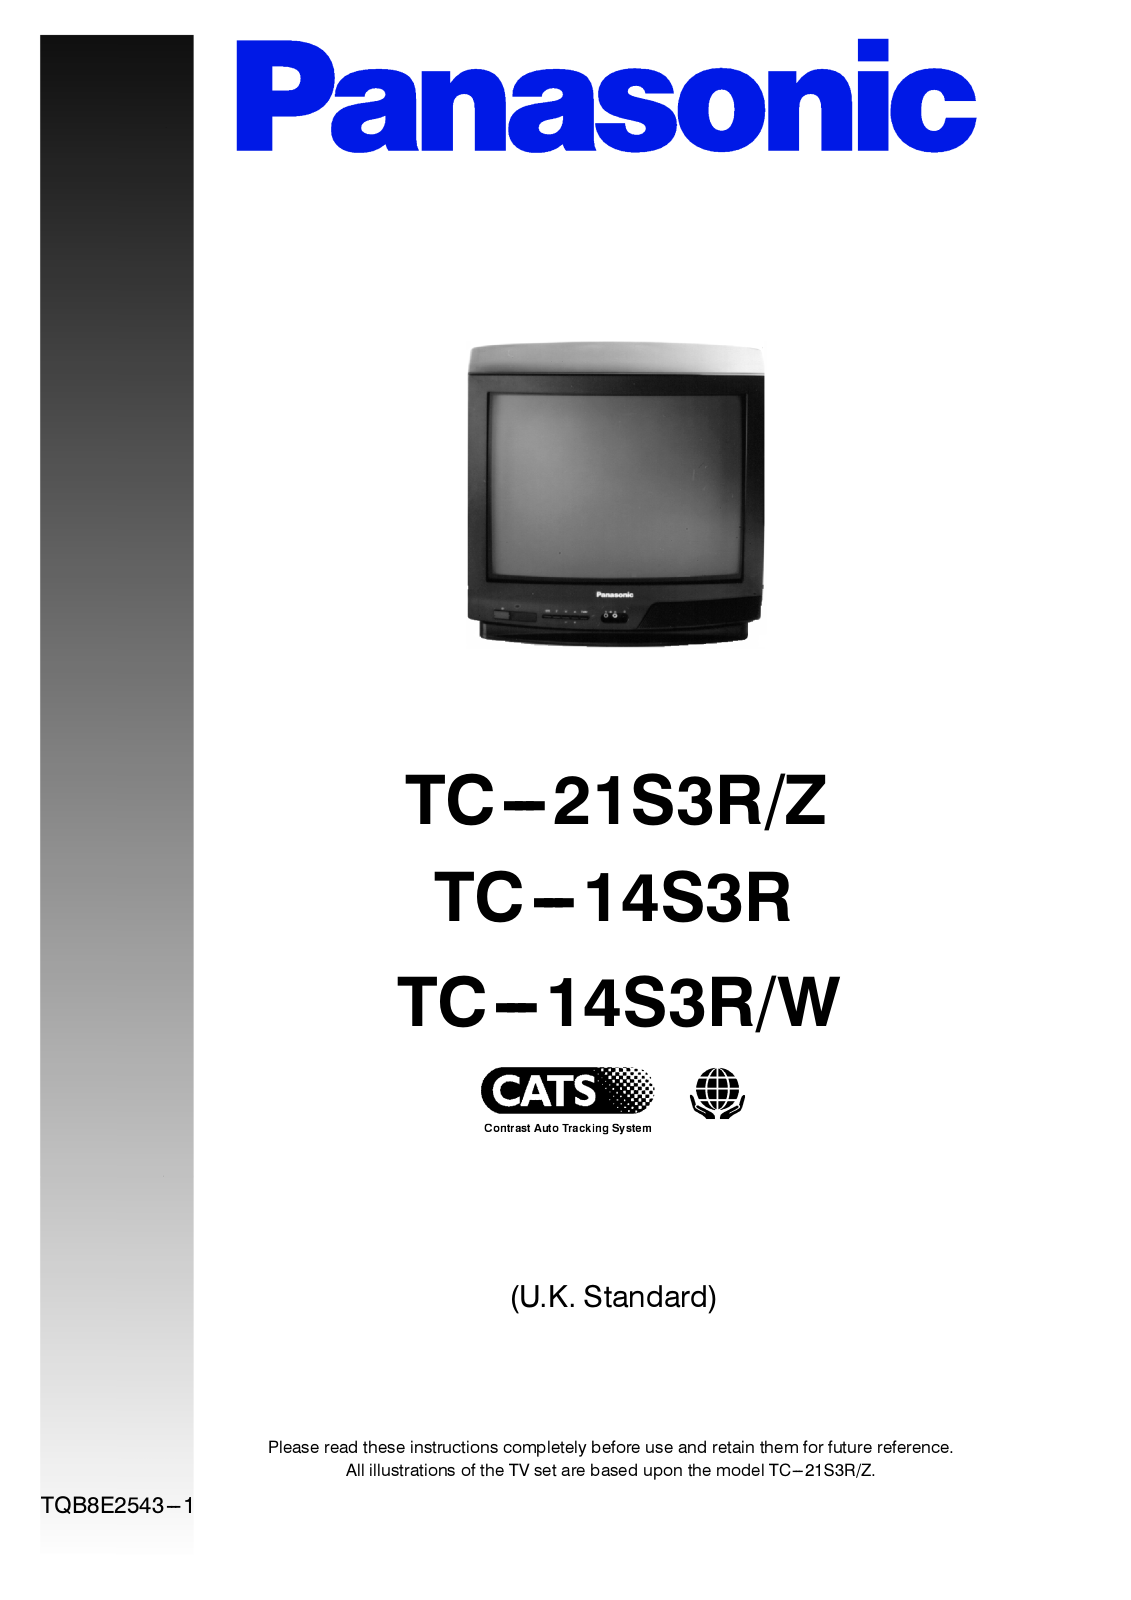 Panasonic TC-14S3R, TC-21S3RZ, TC-14S3RW User Manual